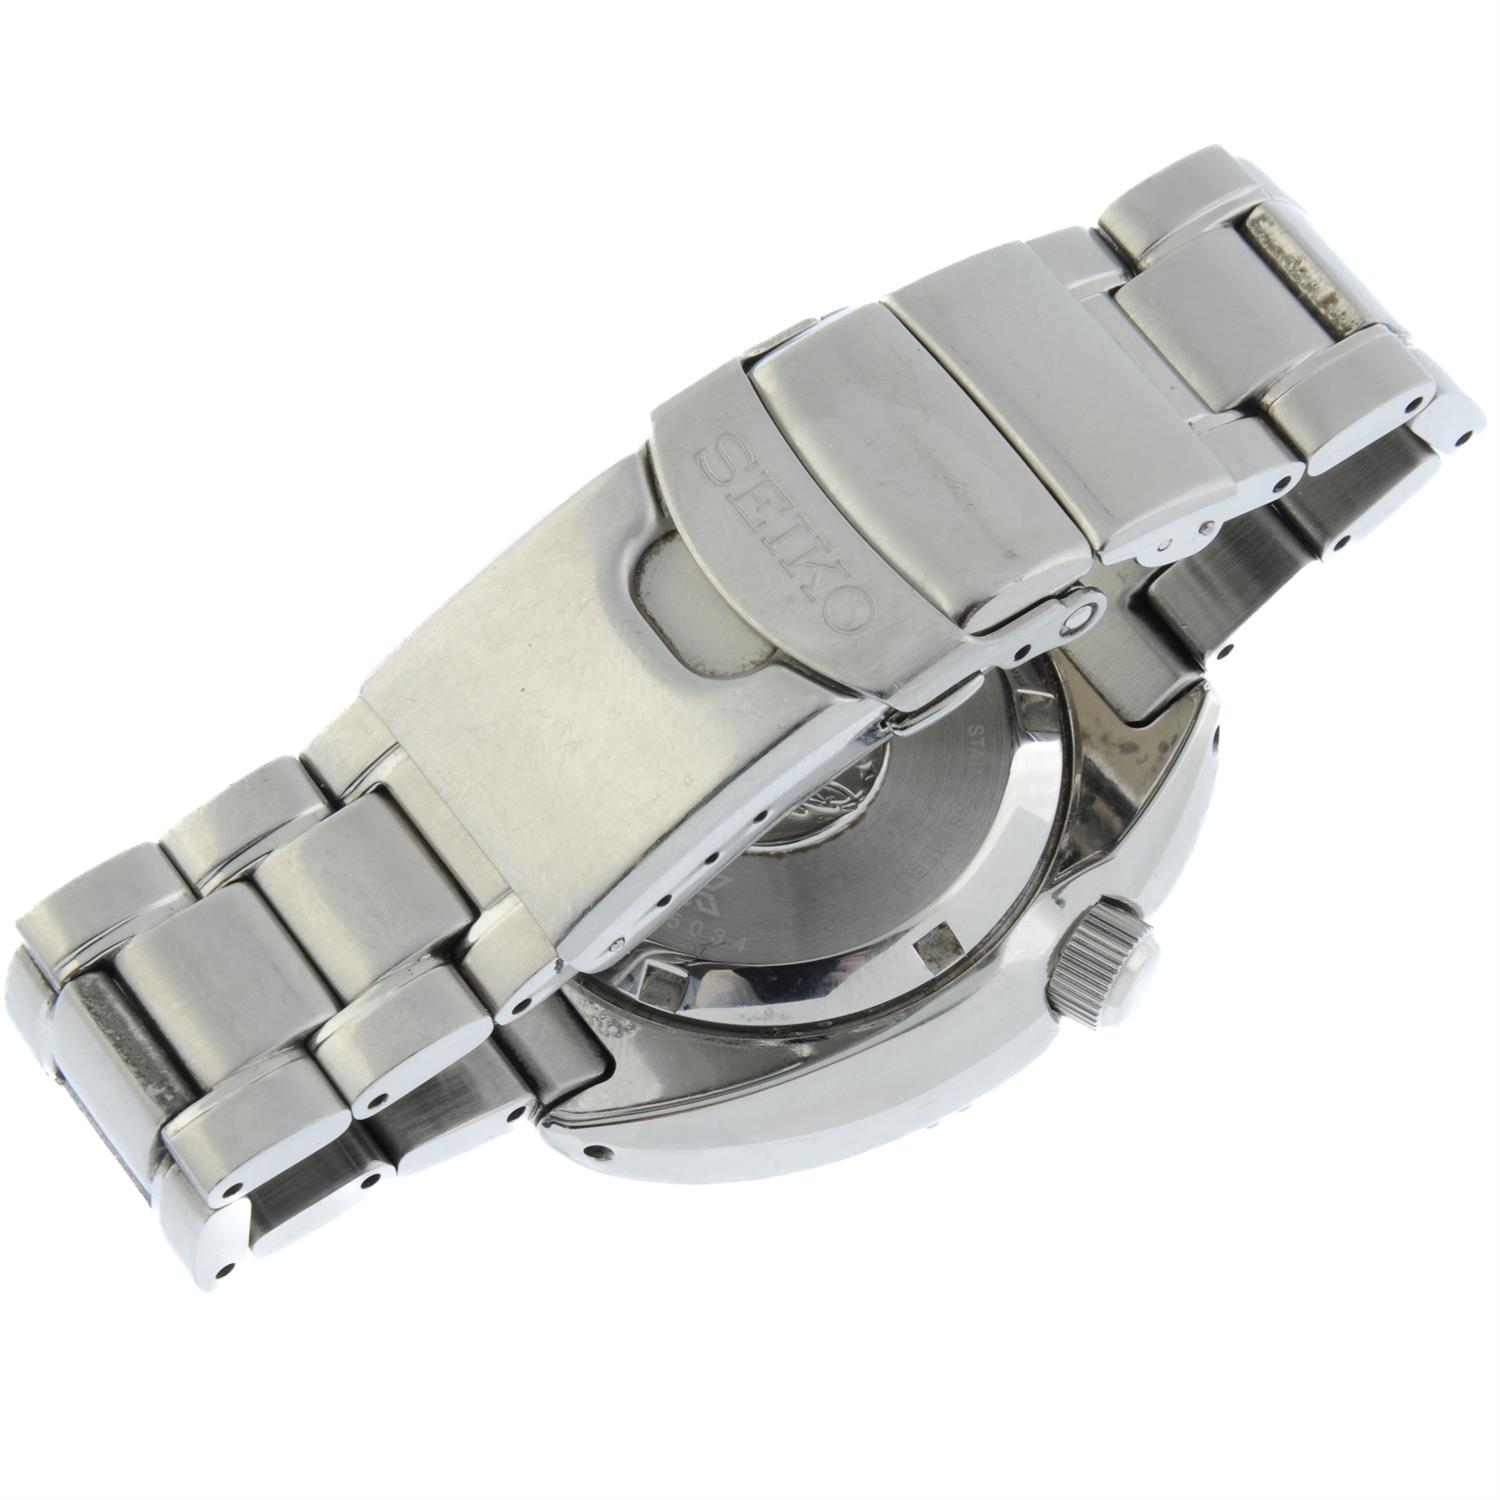 Seiko - a Prospex PADI watch, 45mm. - Image 2 of 4